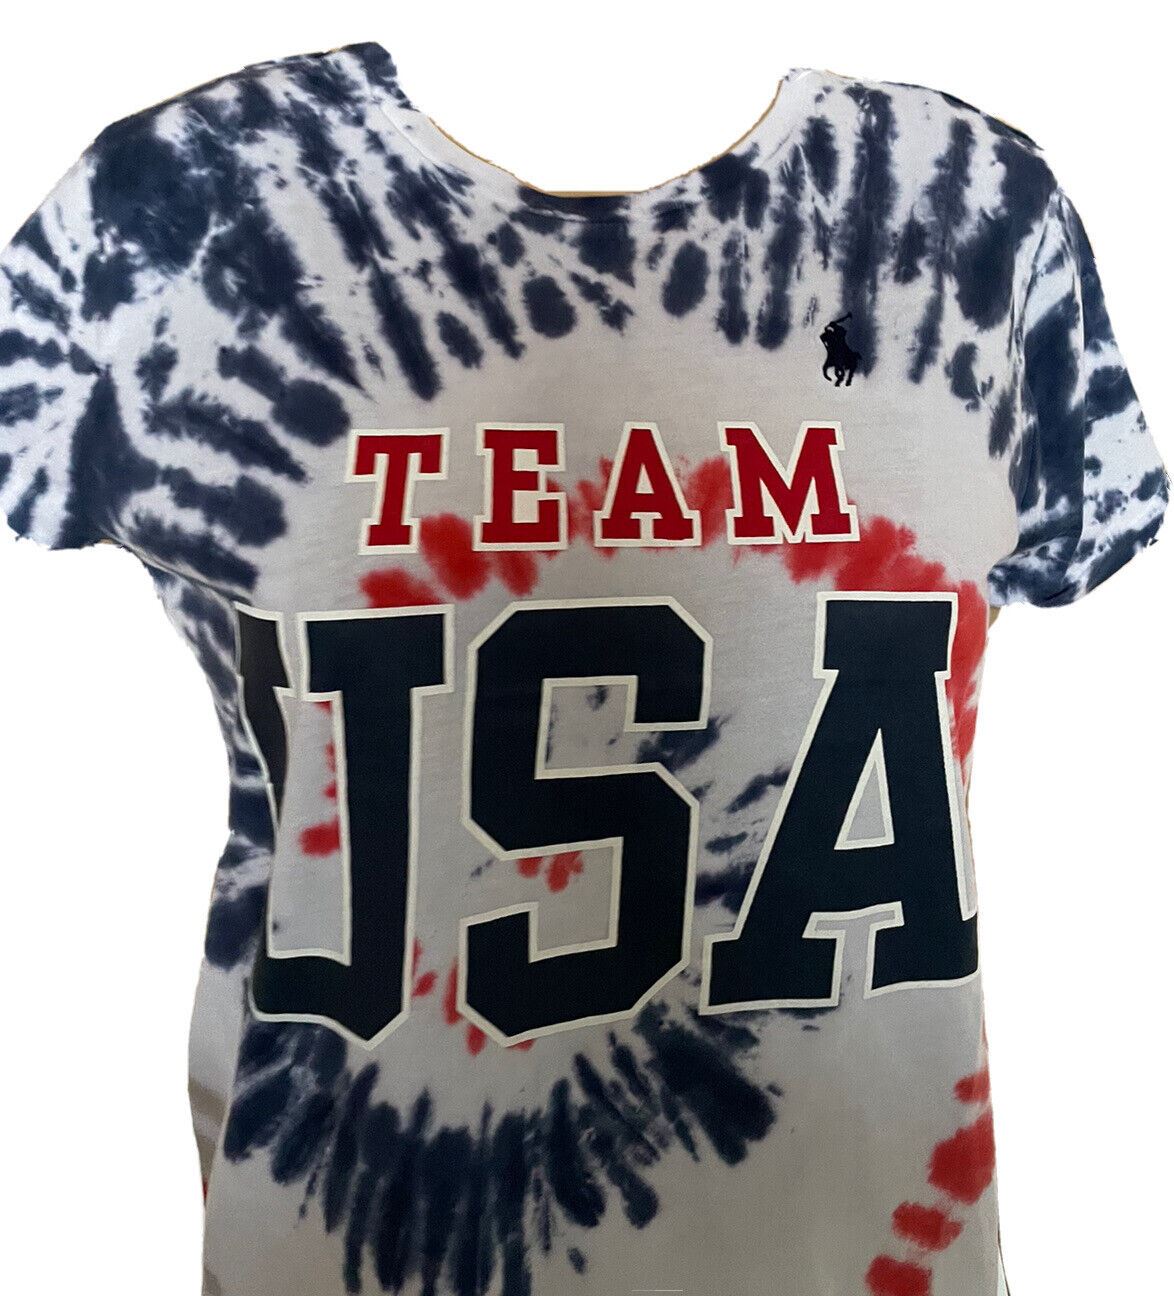 Neu mit Etikett: Polo Ralph Lauren, mehrfarbiges Kurzarm-Team-USA-T-Shirt, Größe L